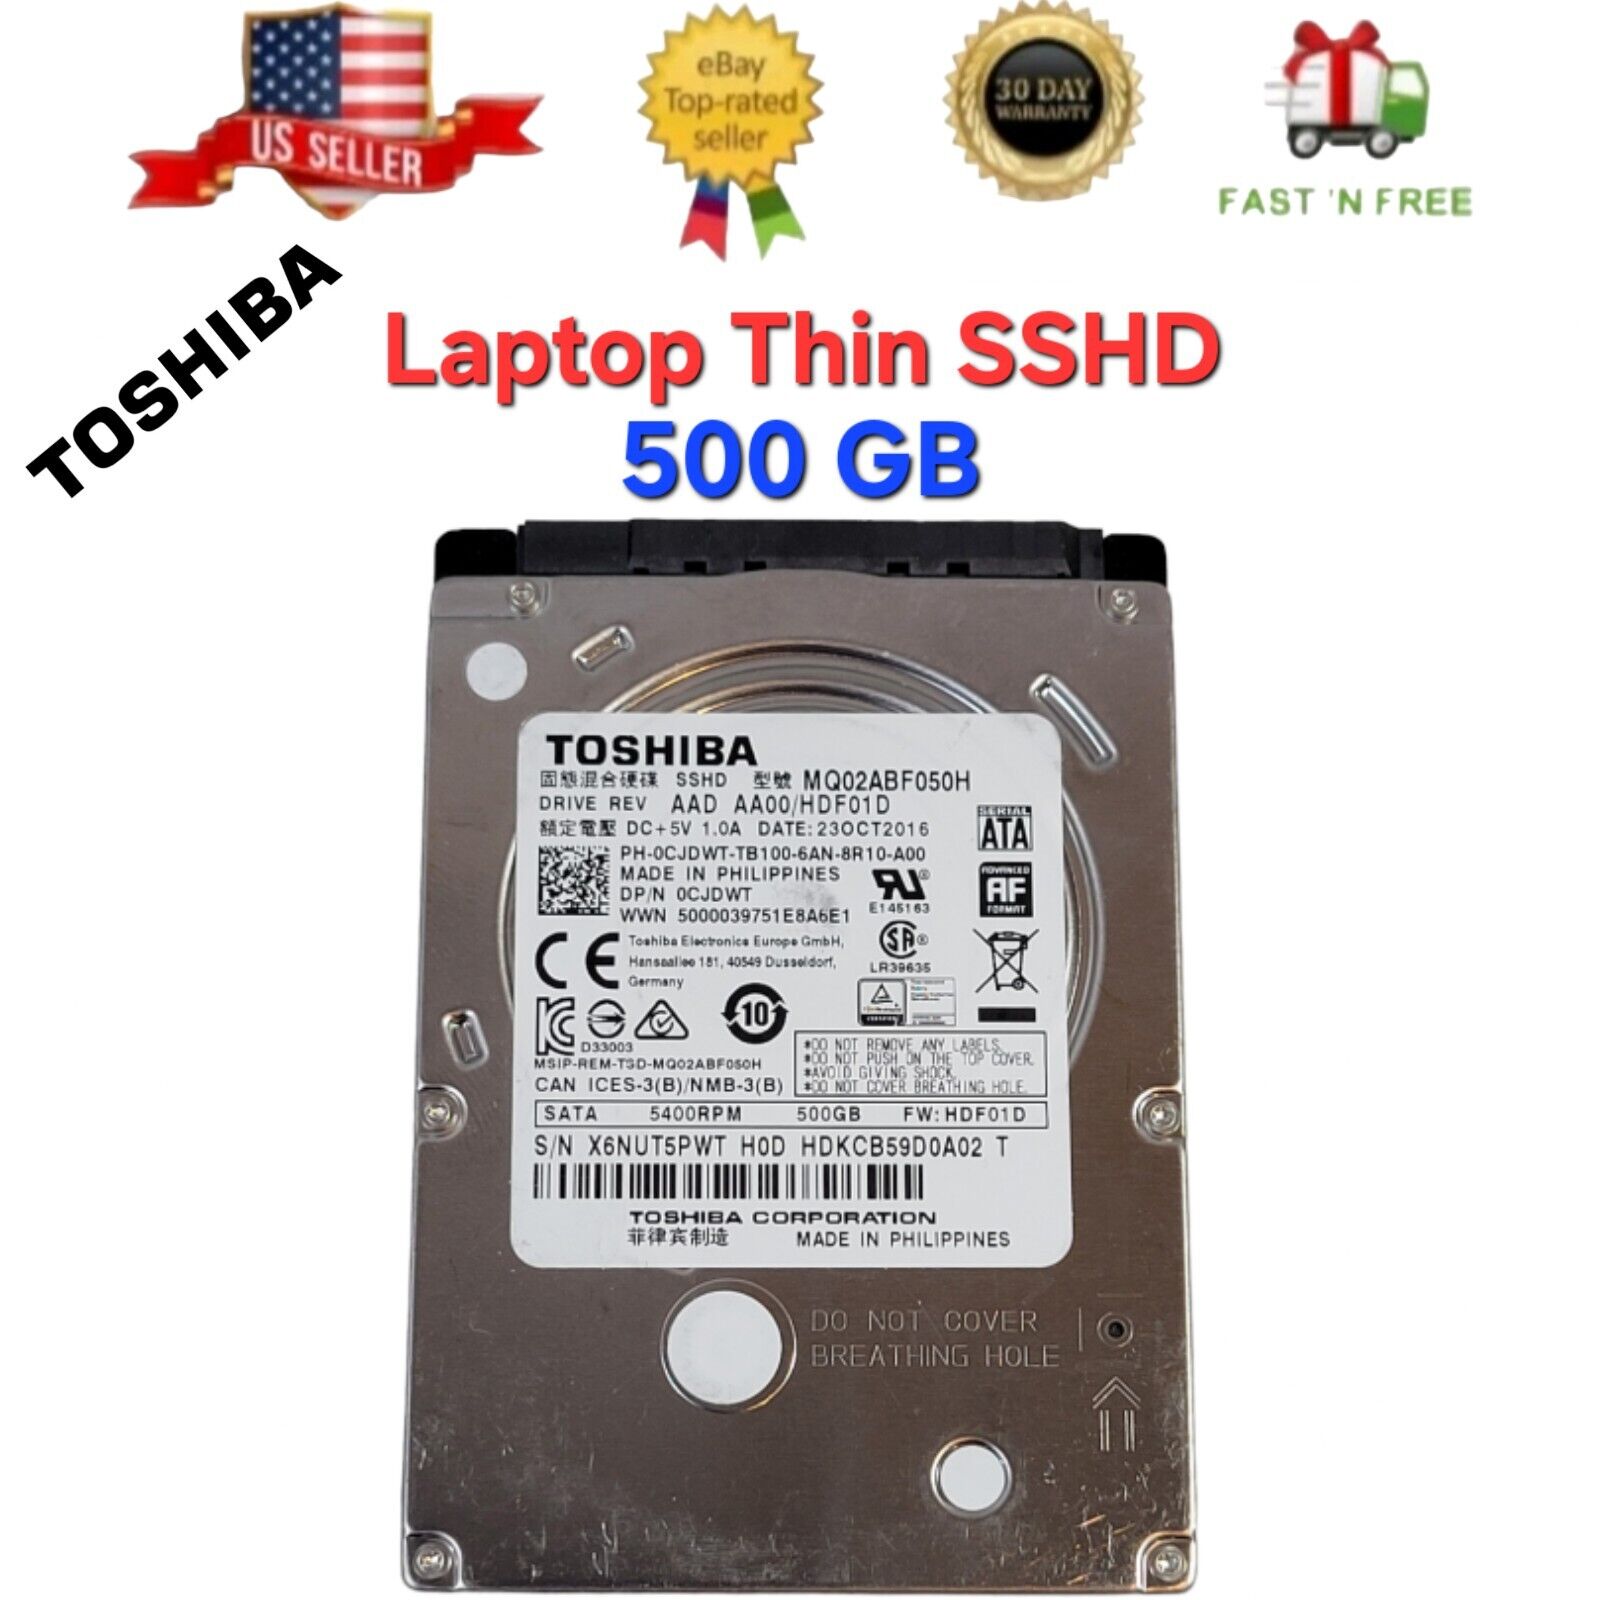 Toshiba 500GB SSHD Internal 2.5 inch Laptop Thin Hard Drive MQ02ABF050H